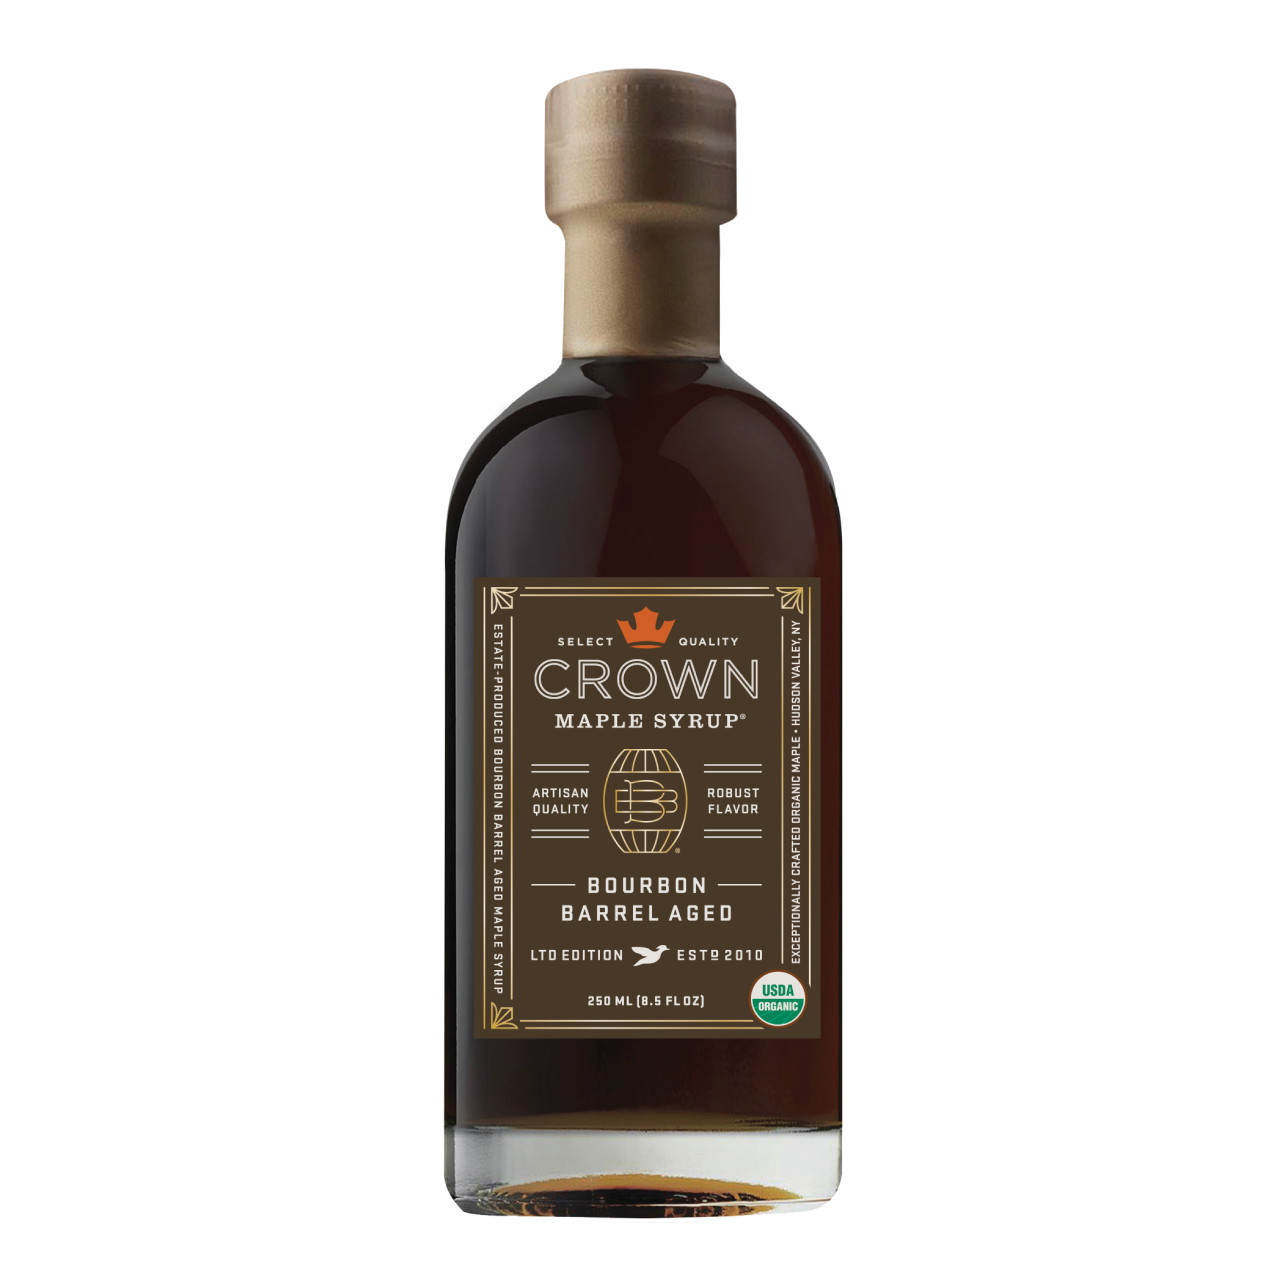 Crown Maple Syrup, Bourbon Barrrel Aged 250 ml